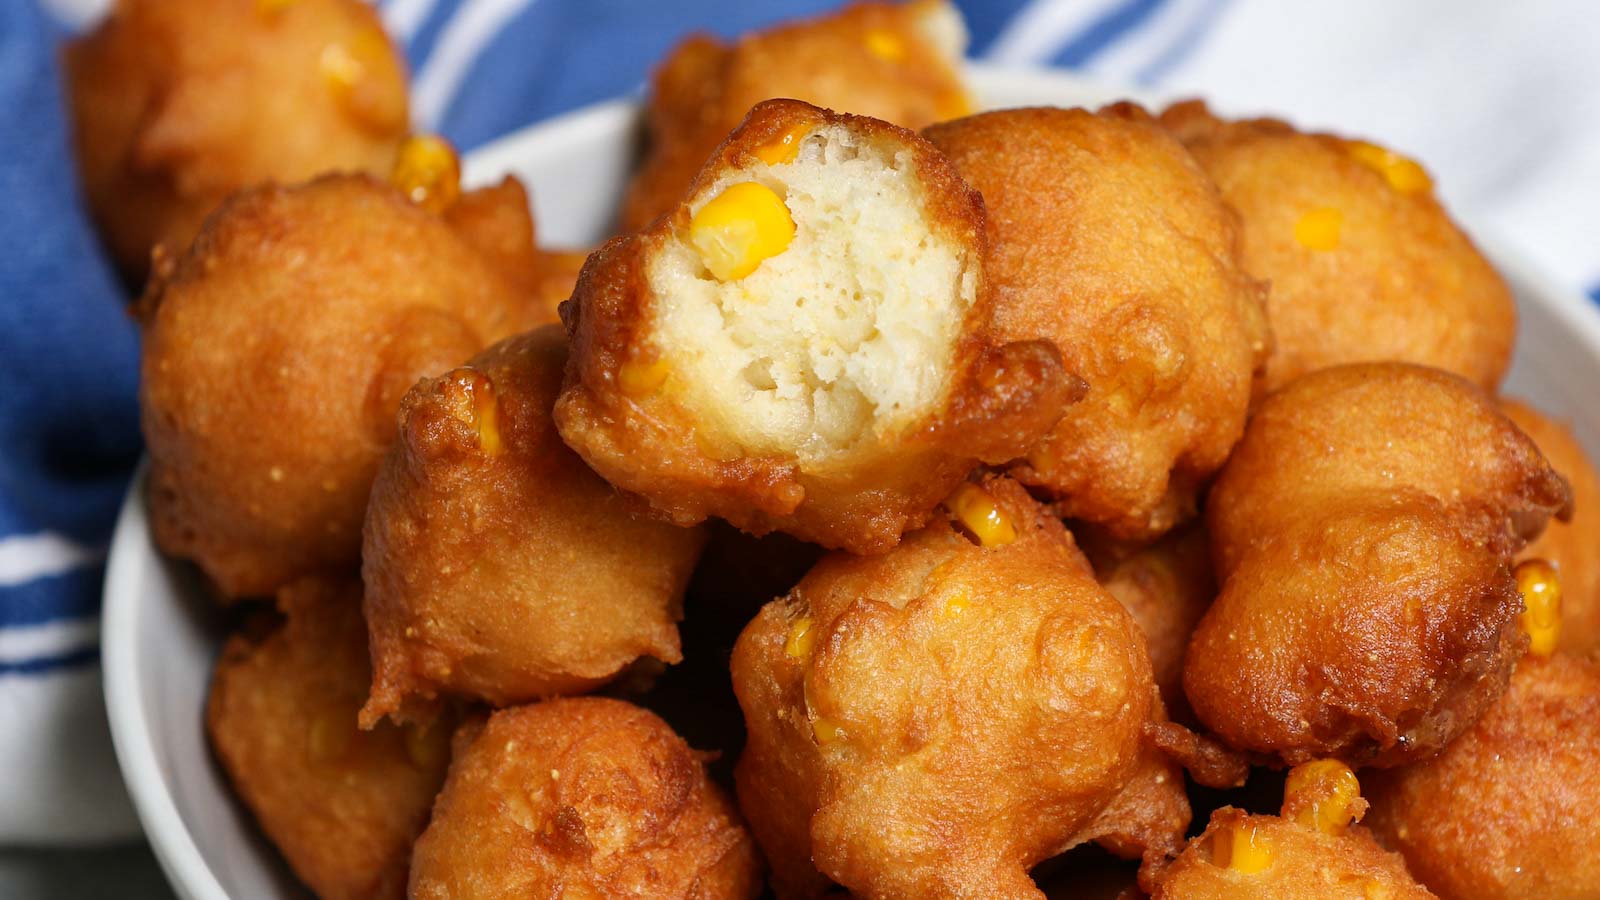 10 Best Fried Breakfast Items - IzzyCooking